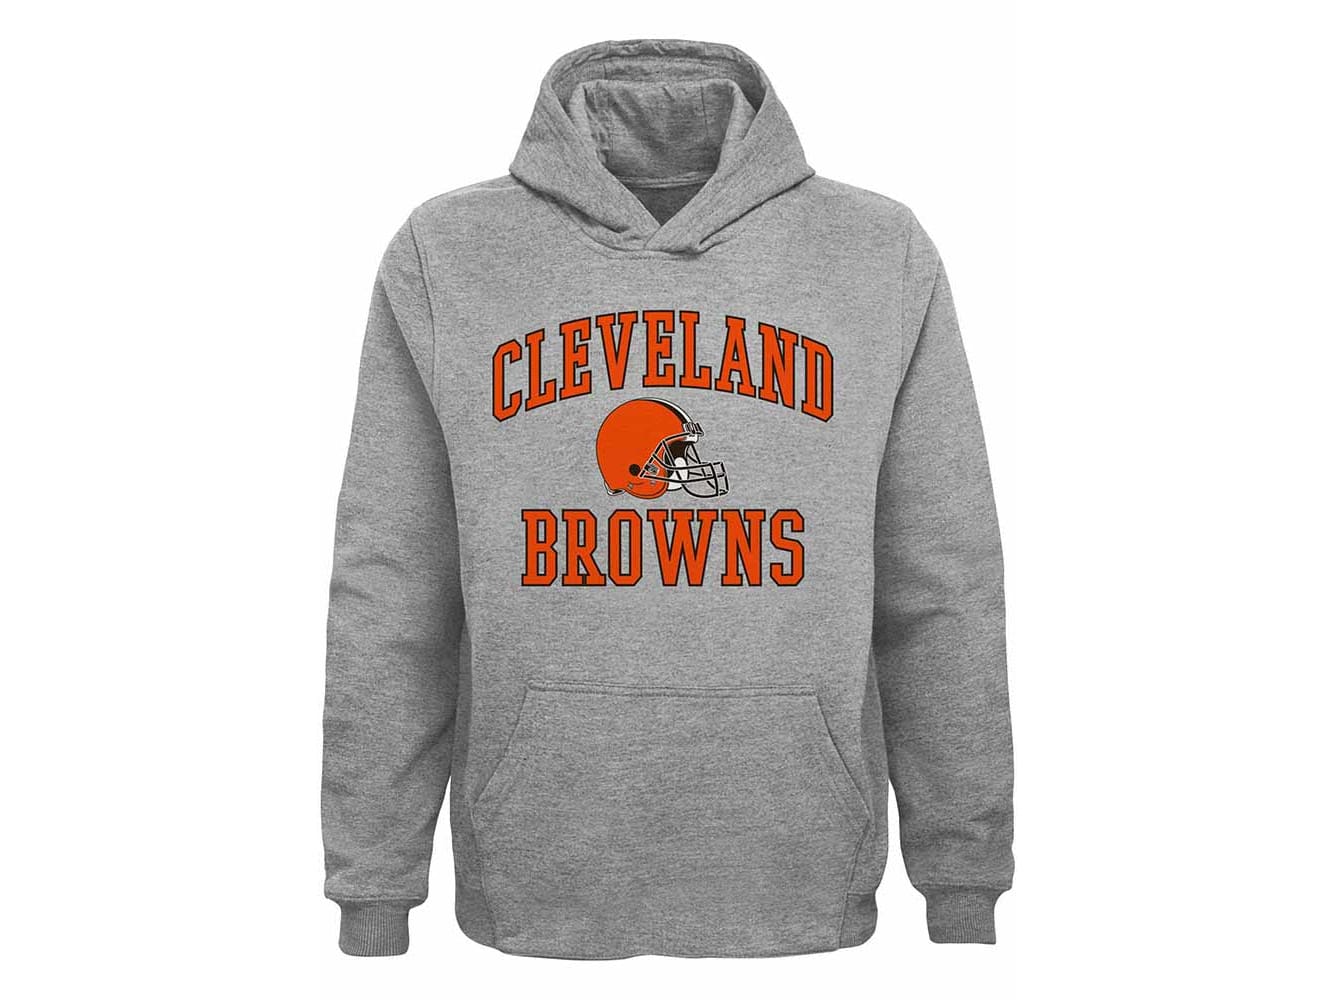 Cleveland Browns Sweatshirts  Shop Browns Crewnecks & More